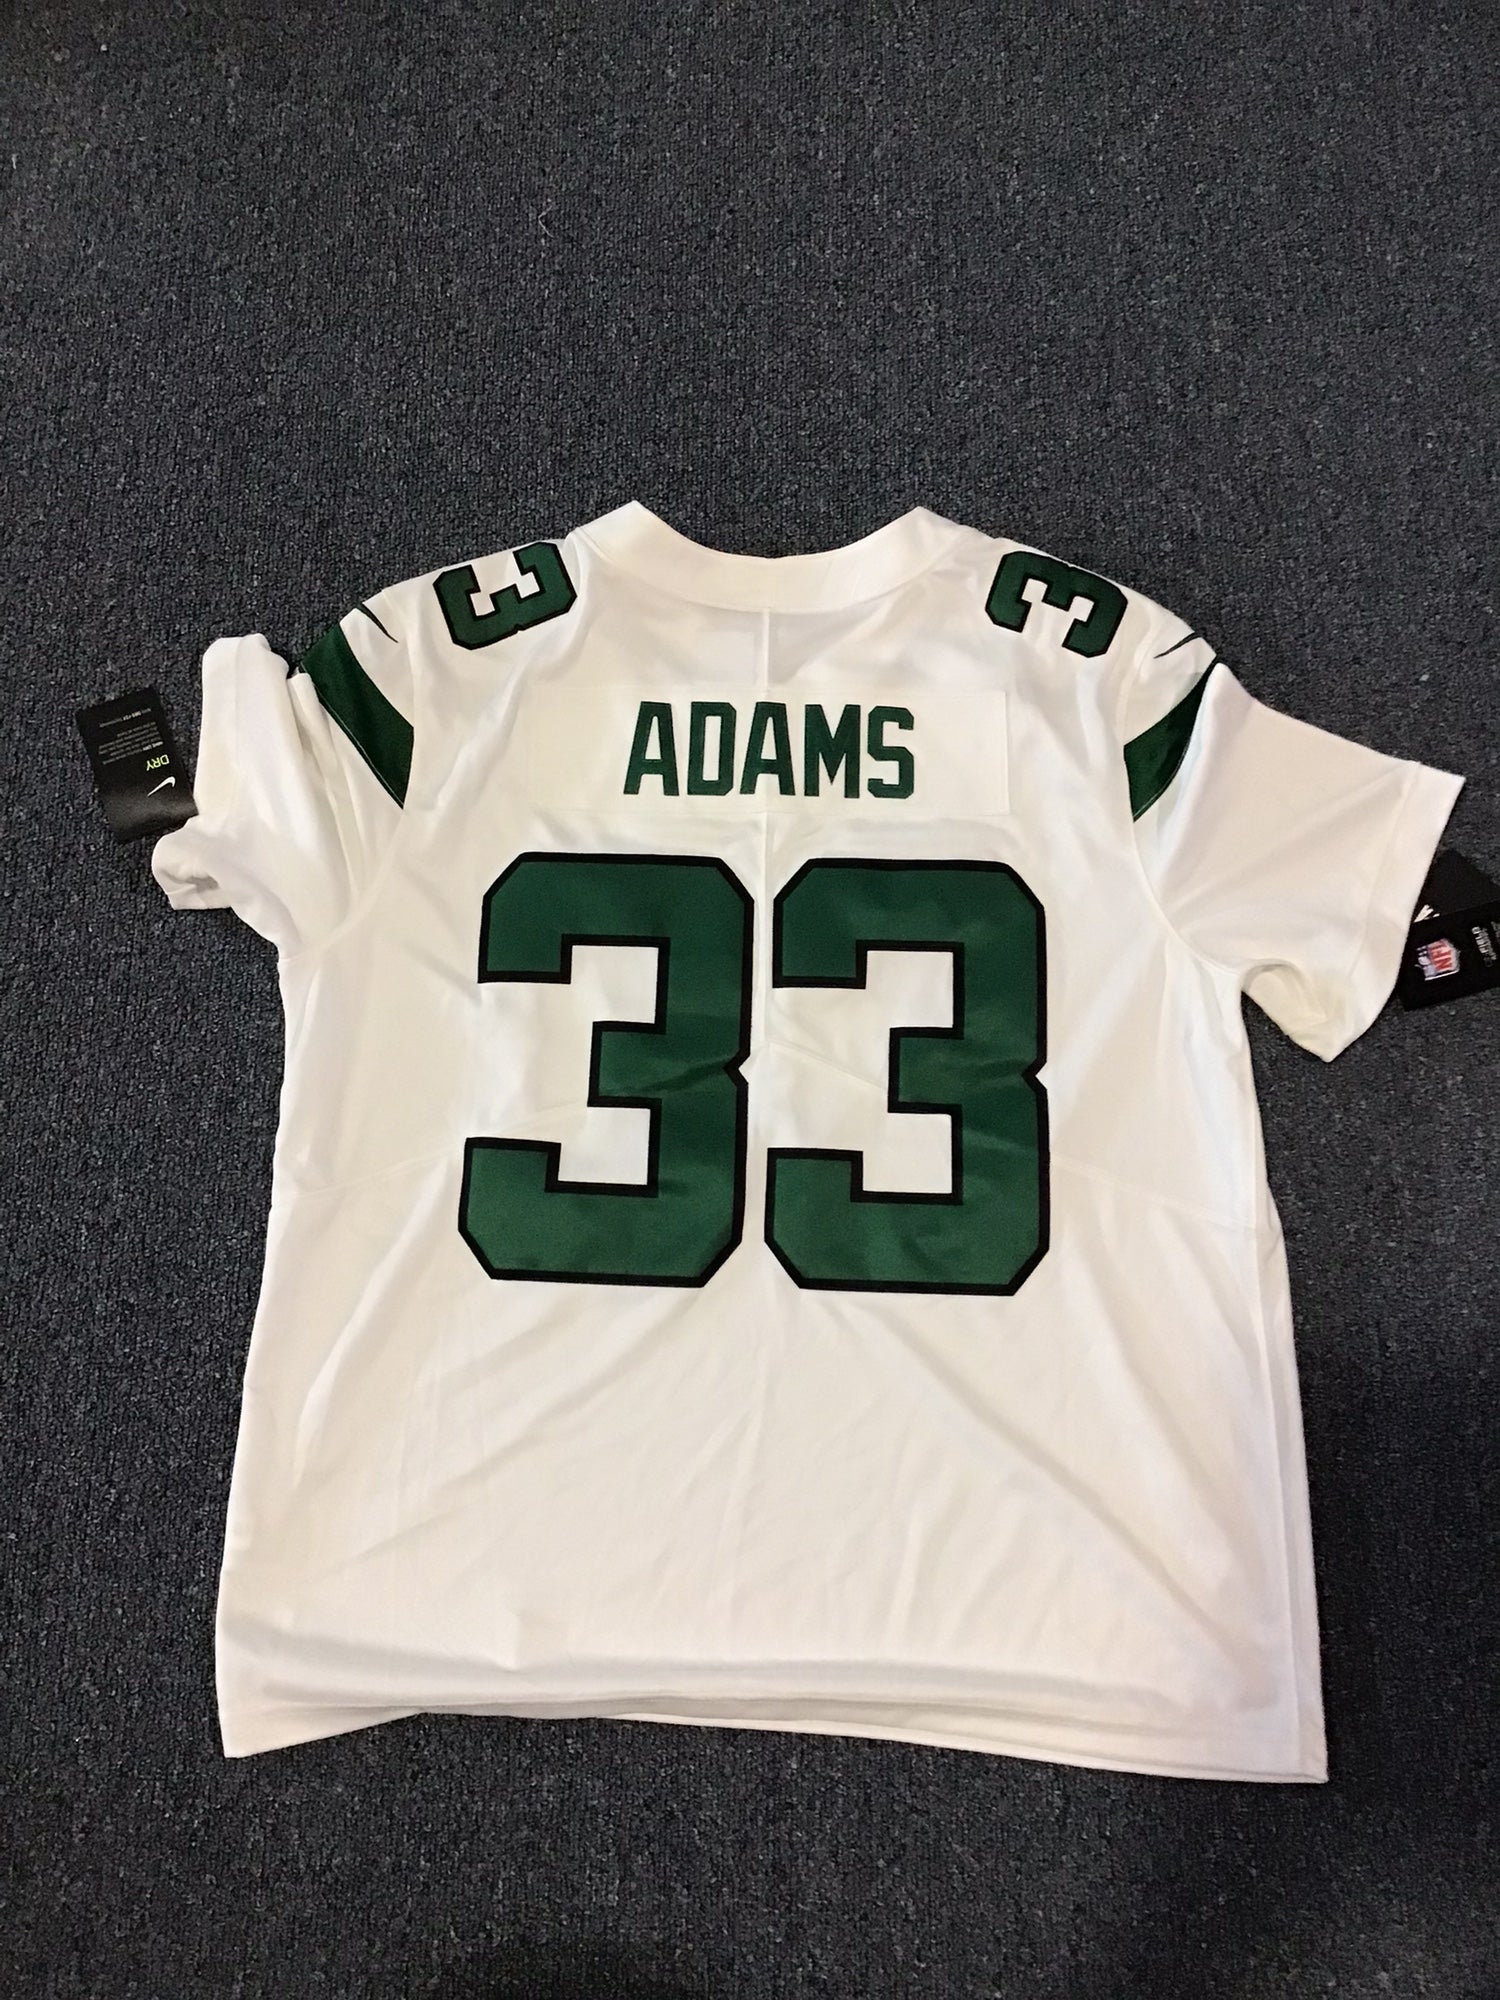 Nike, Shirts, New York Nike Jets Adams 33 Jersey